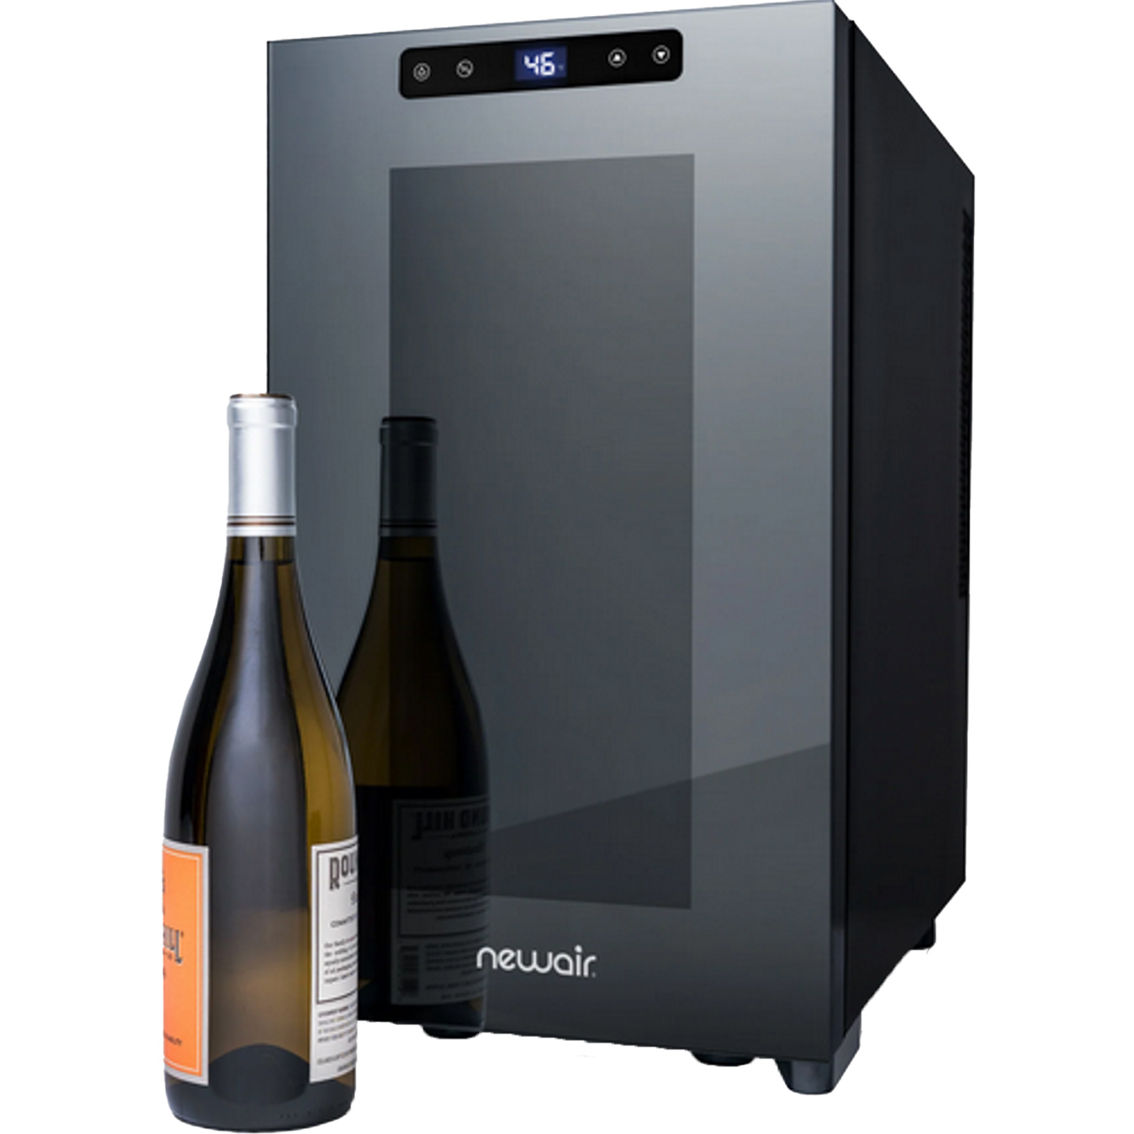 Newair Shadow T Series Wine Cooler Refrigerator - Image 3 of 8